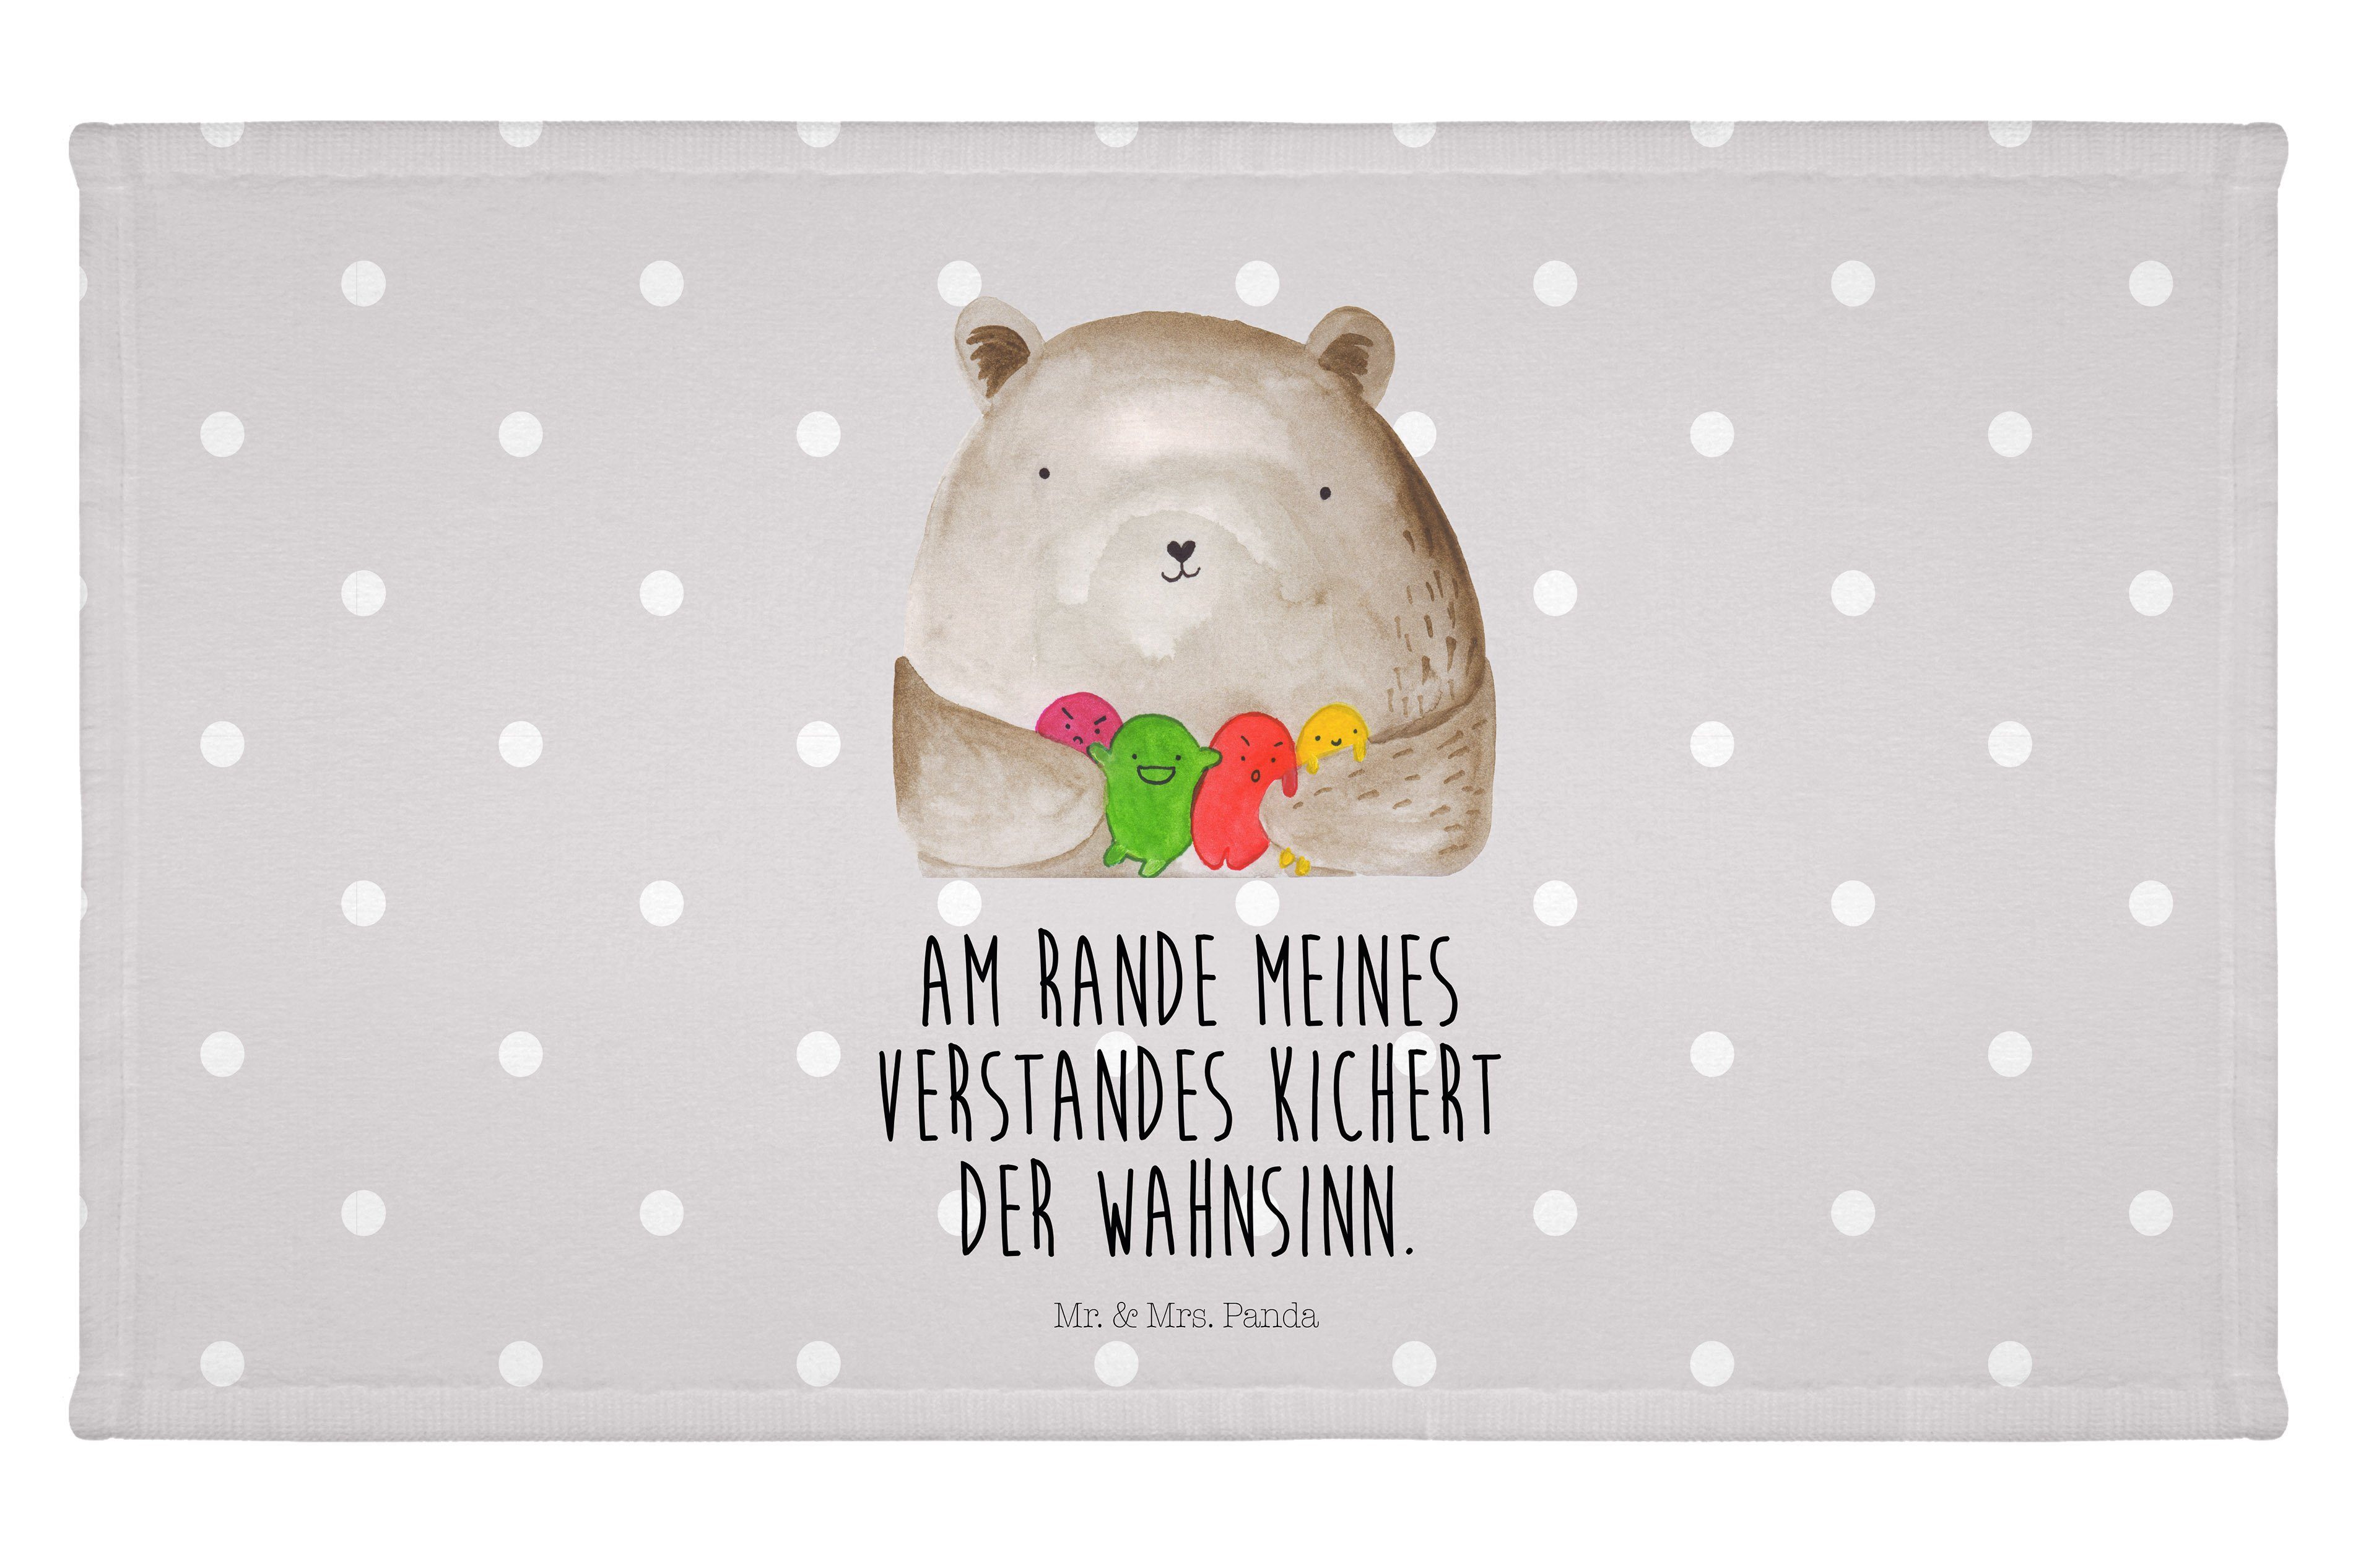 Mr. & Mrs. Panda Handtuch Pastell Geschenk, Verrückt, - Bär Teddy, (1-St) Ted, - Grau Gefühl Gästetuch